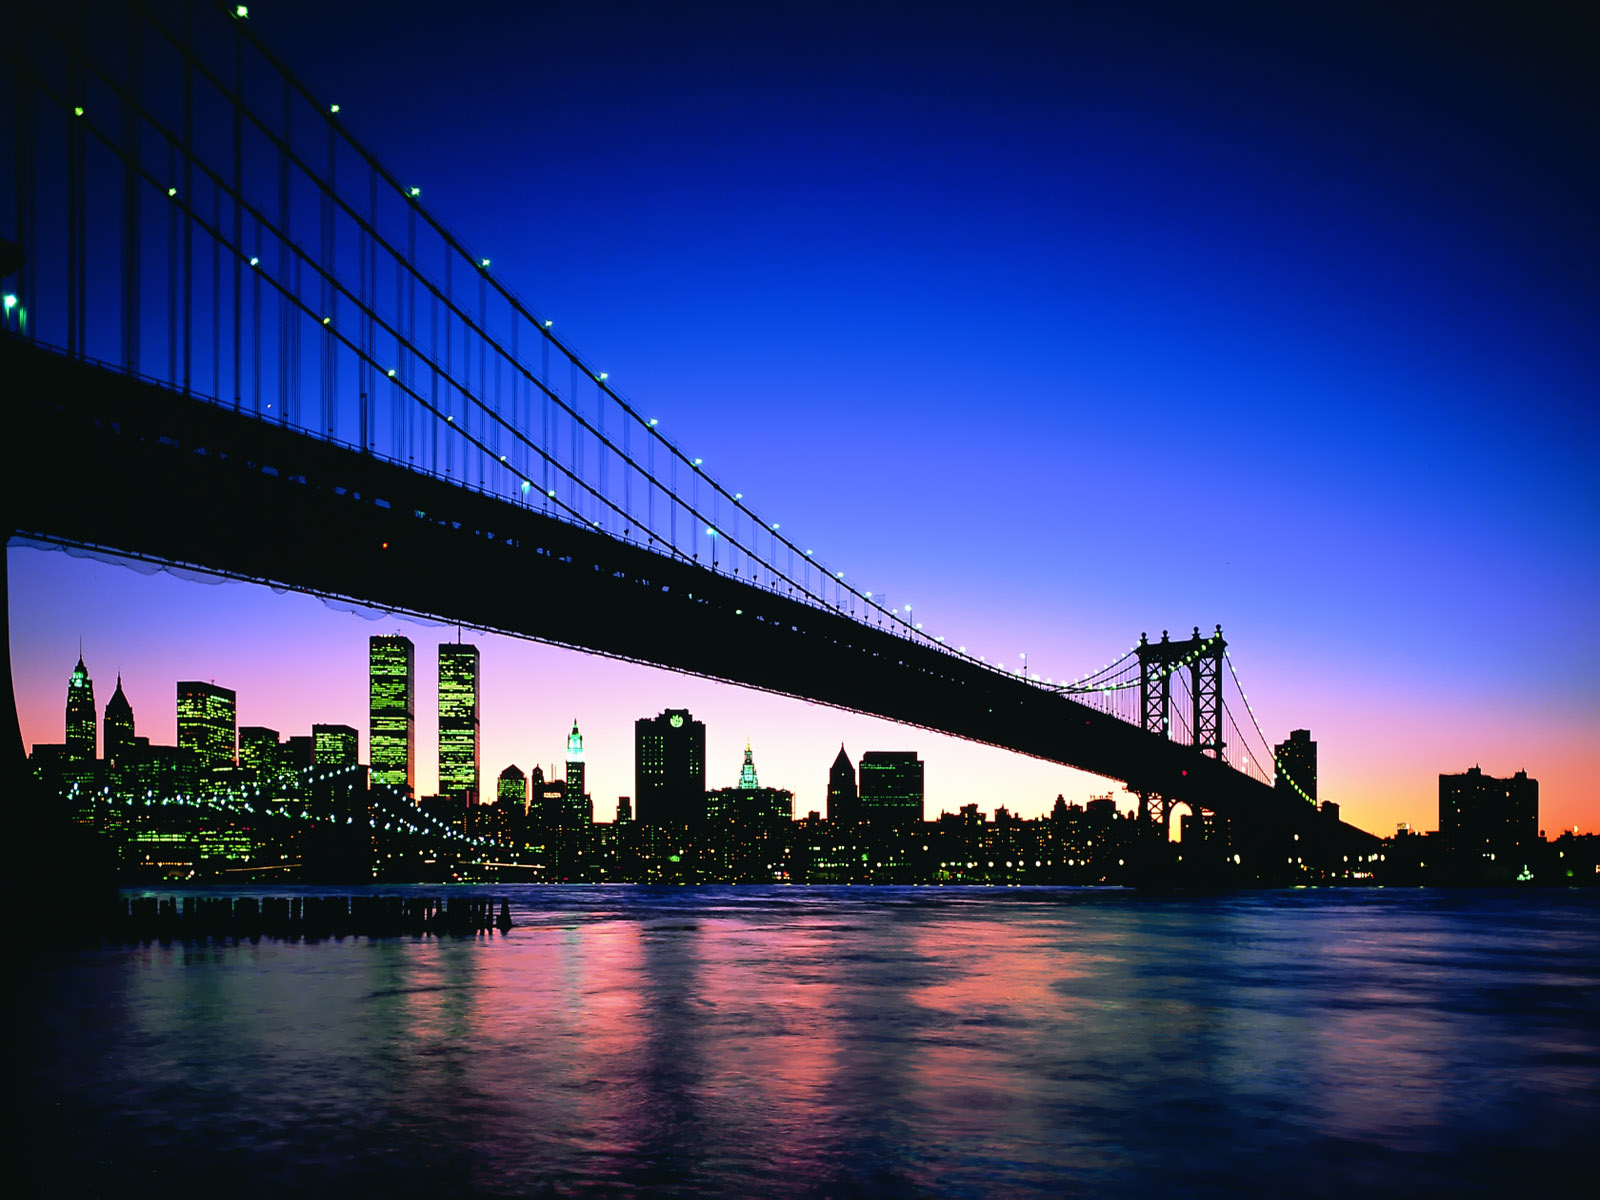 Amazing City Night Bridge Scene Photography Picture Desktop HD Wallpaper